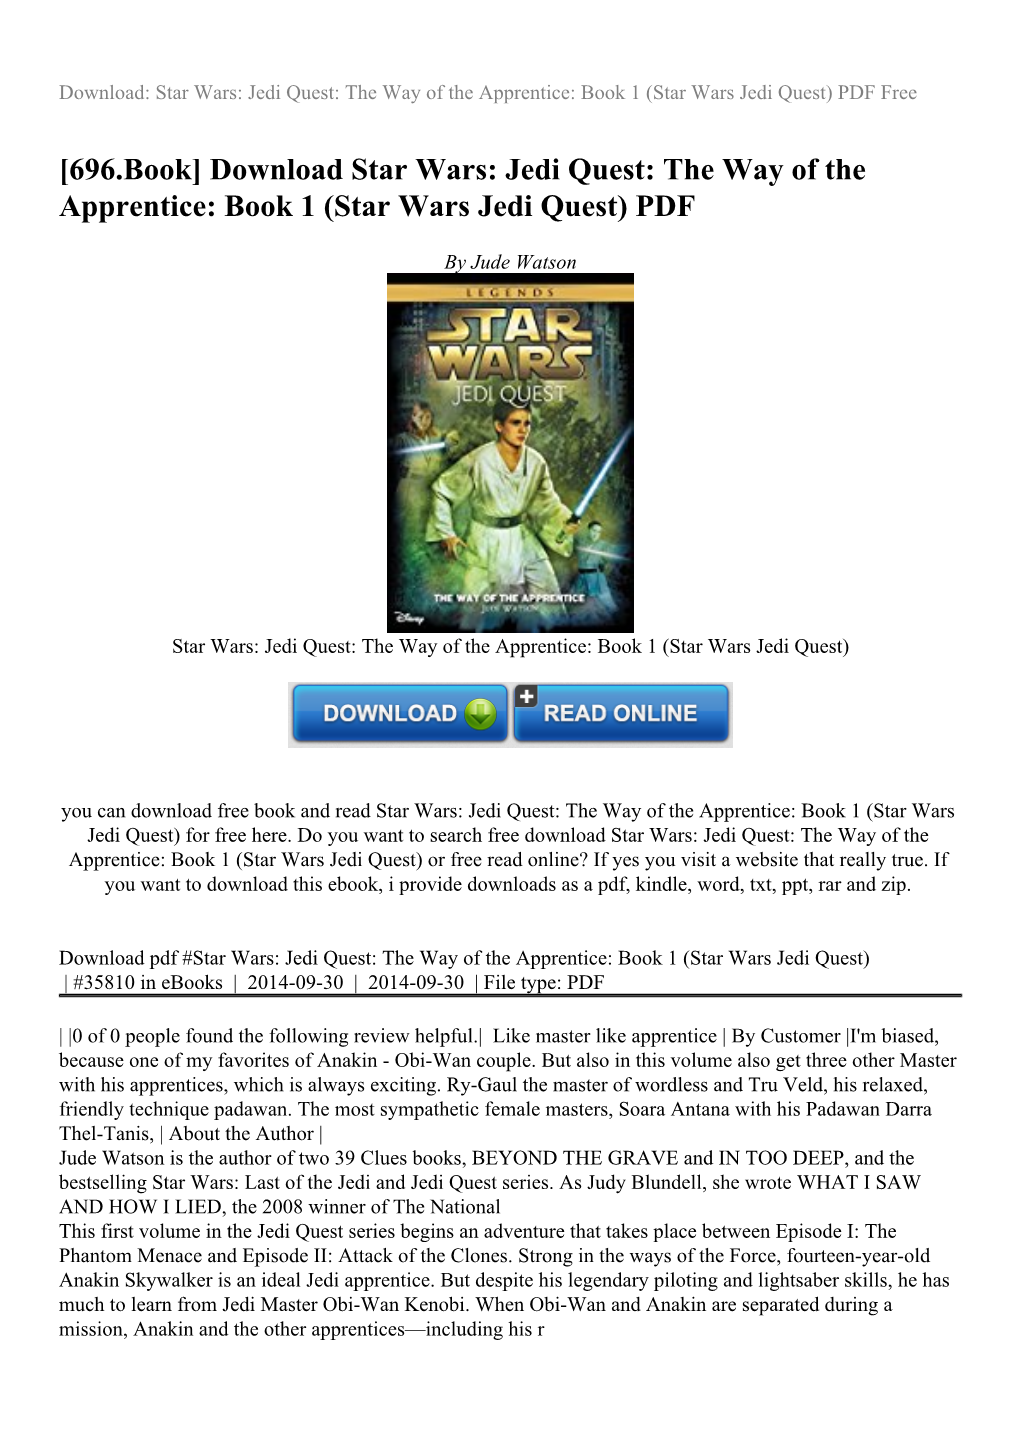 Download Star Wars: Jedi Quest: the Way of the Apprentice: Book 1 (Star Wars Jedi Quest) PDF